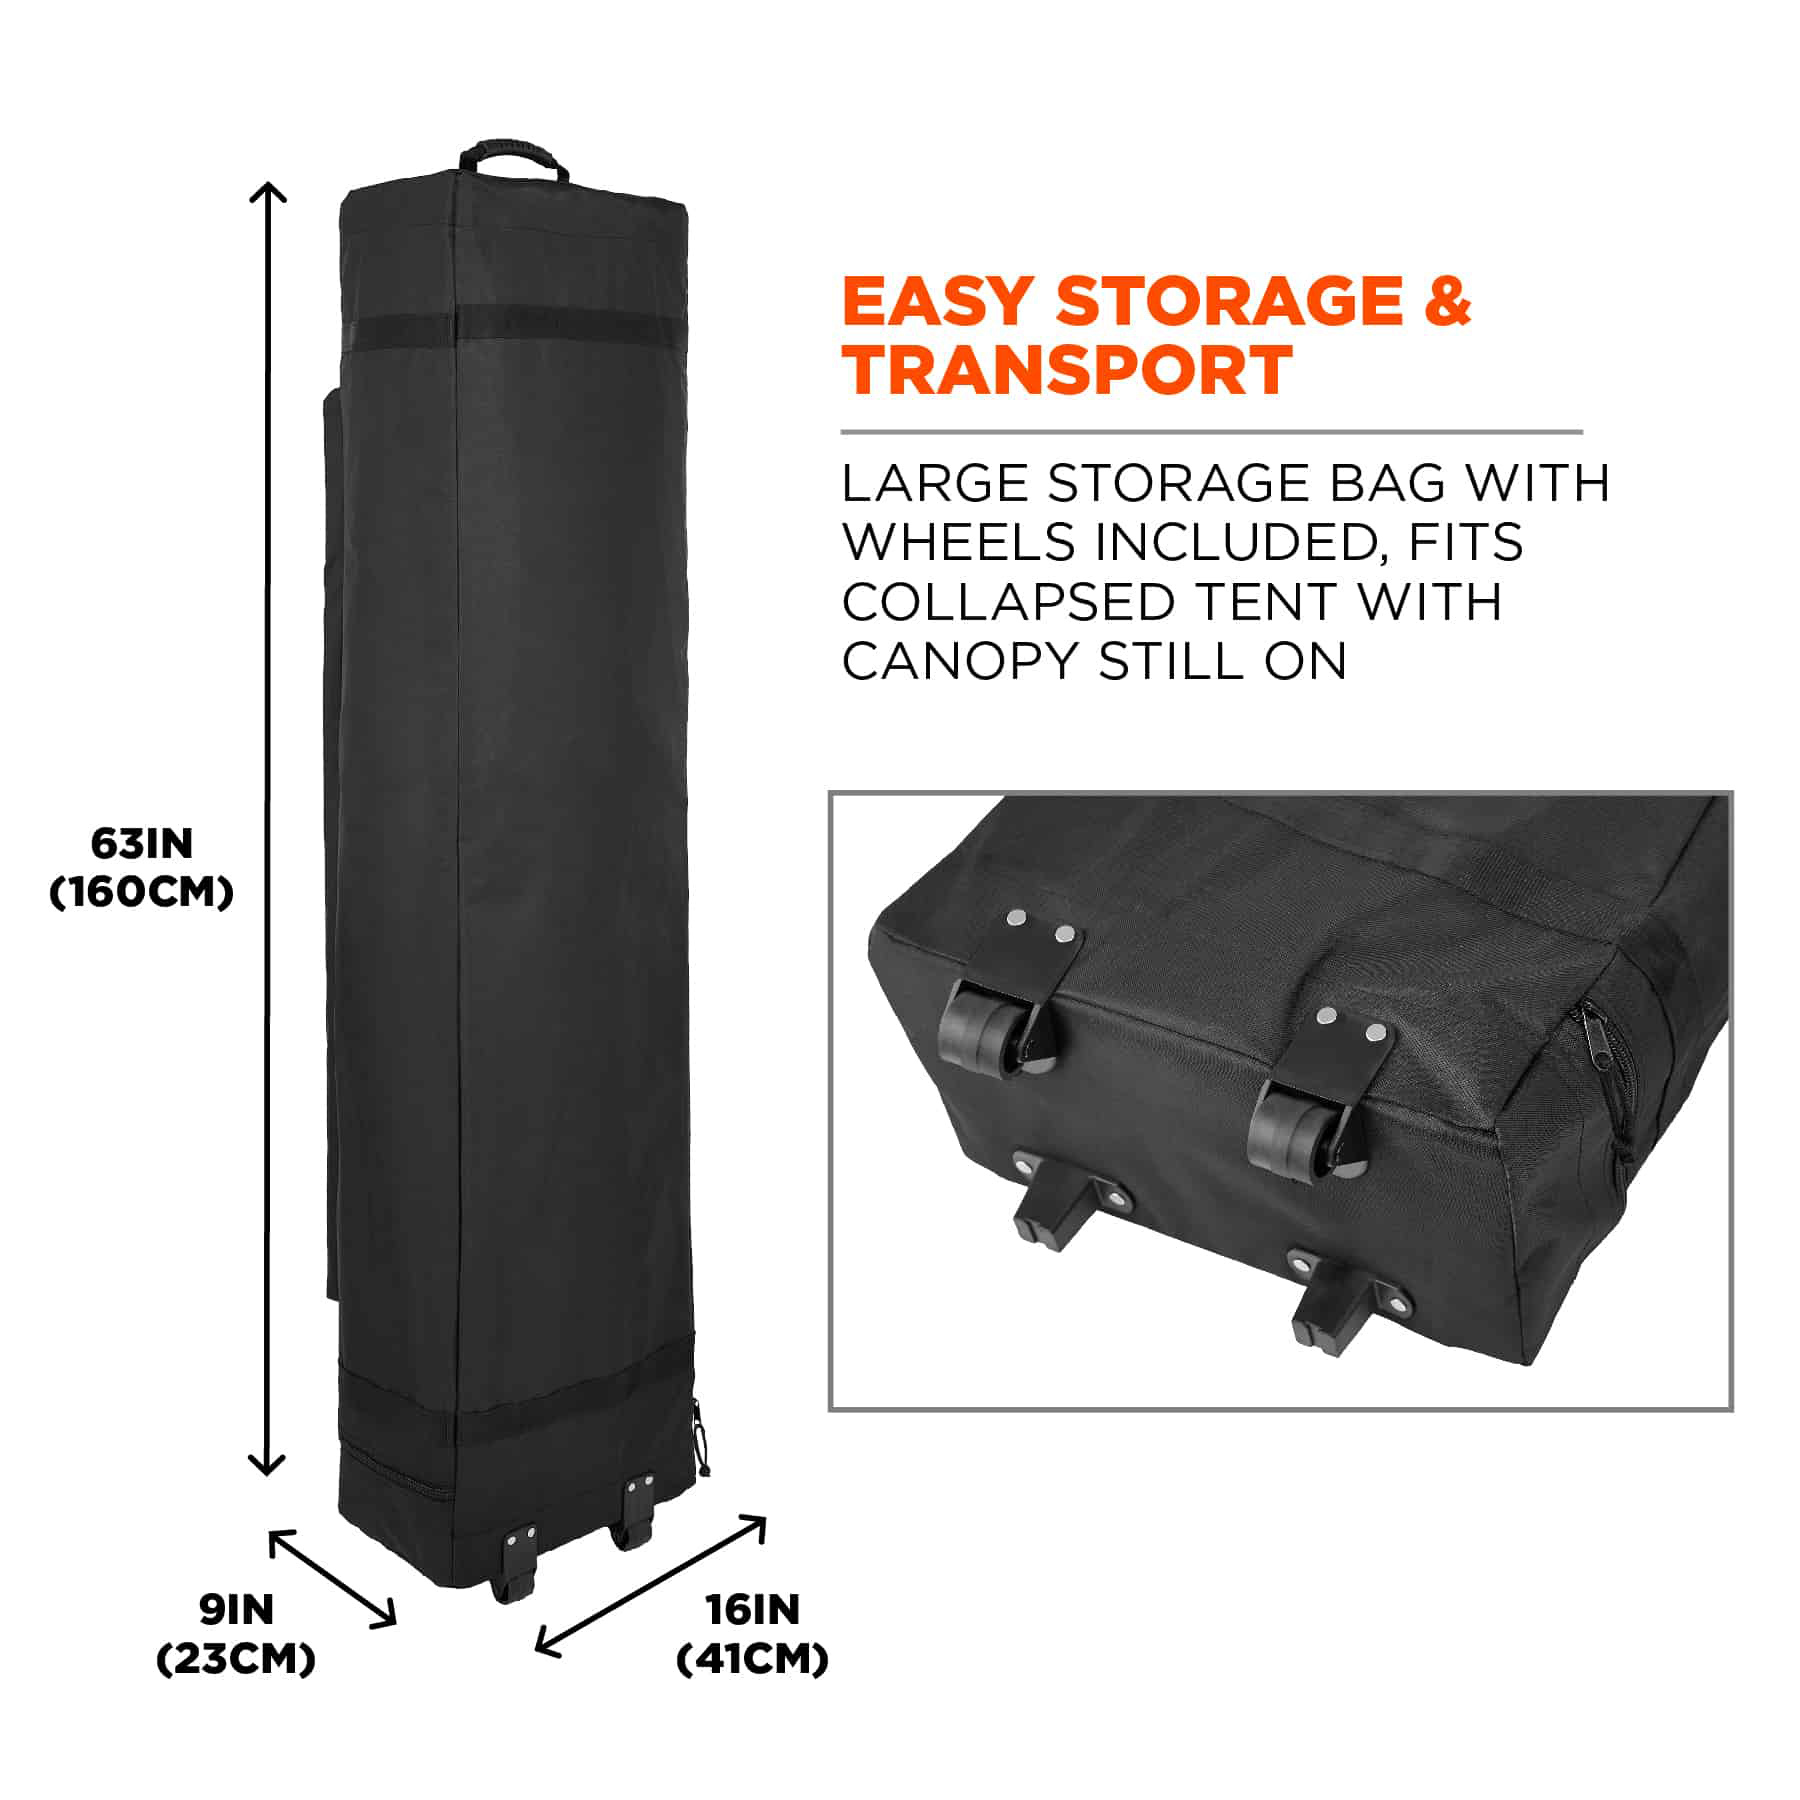 Ergodyne SHAX 6094 Tent Weight Bags, Black, Pack Of 2 Weight Bags